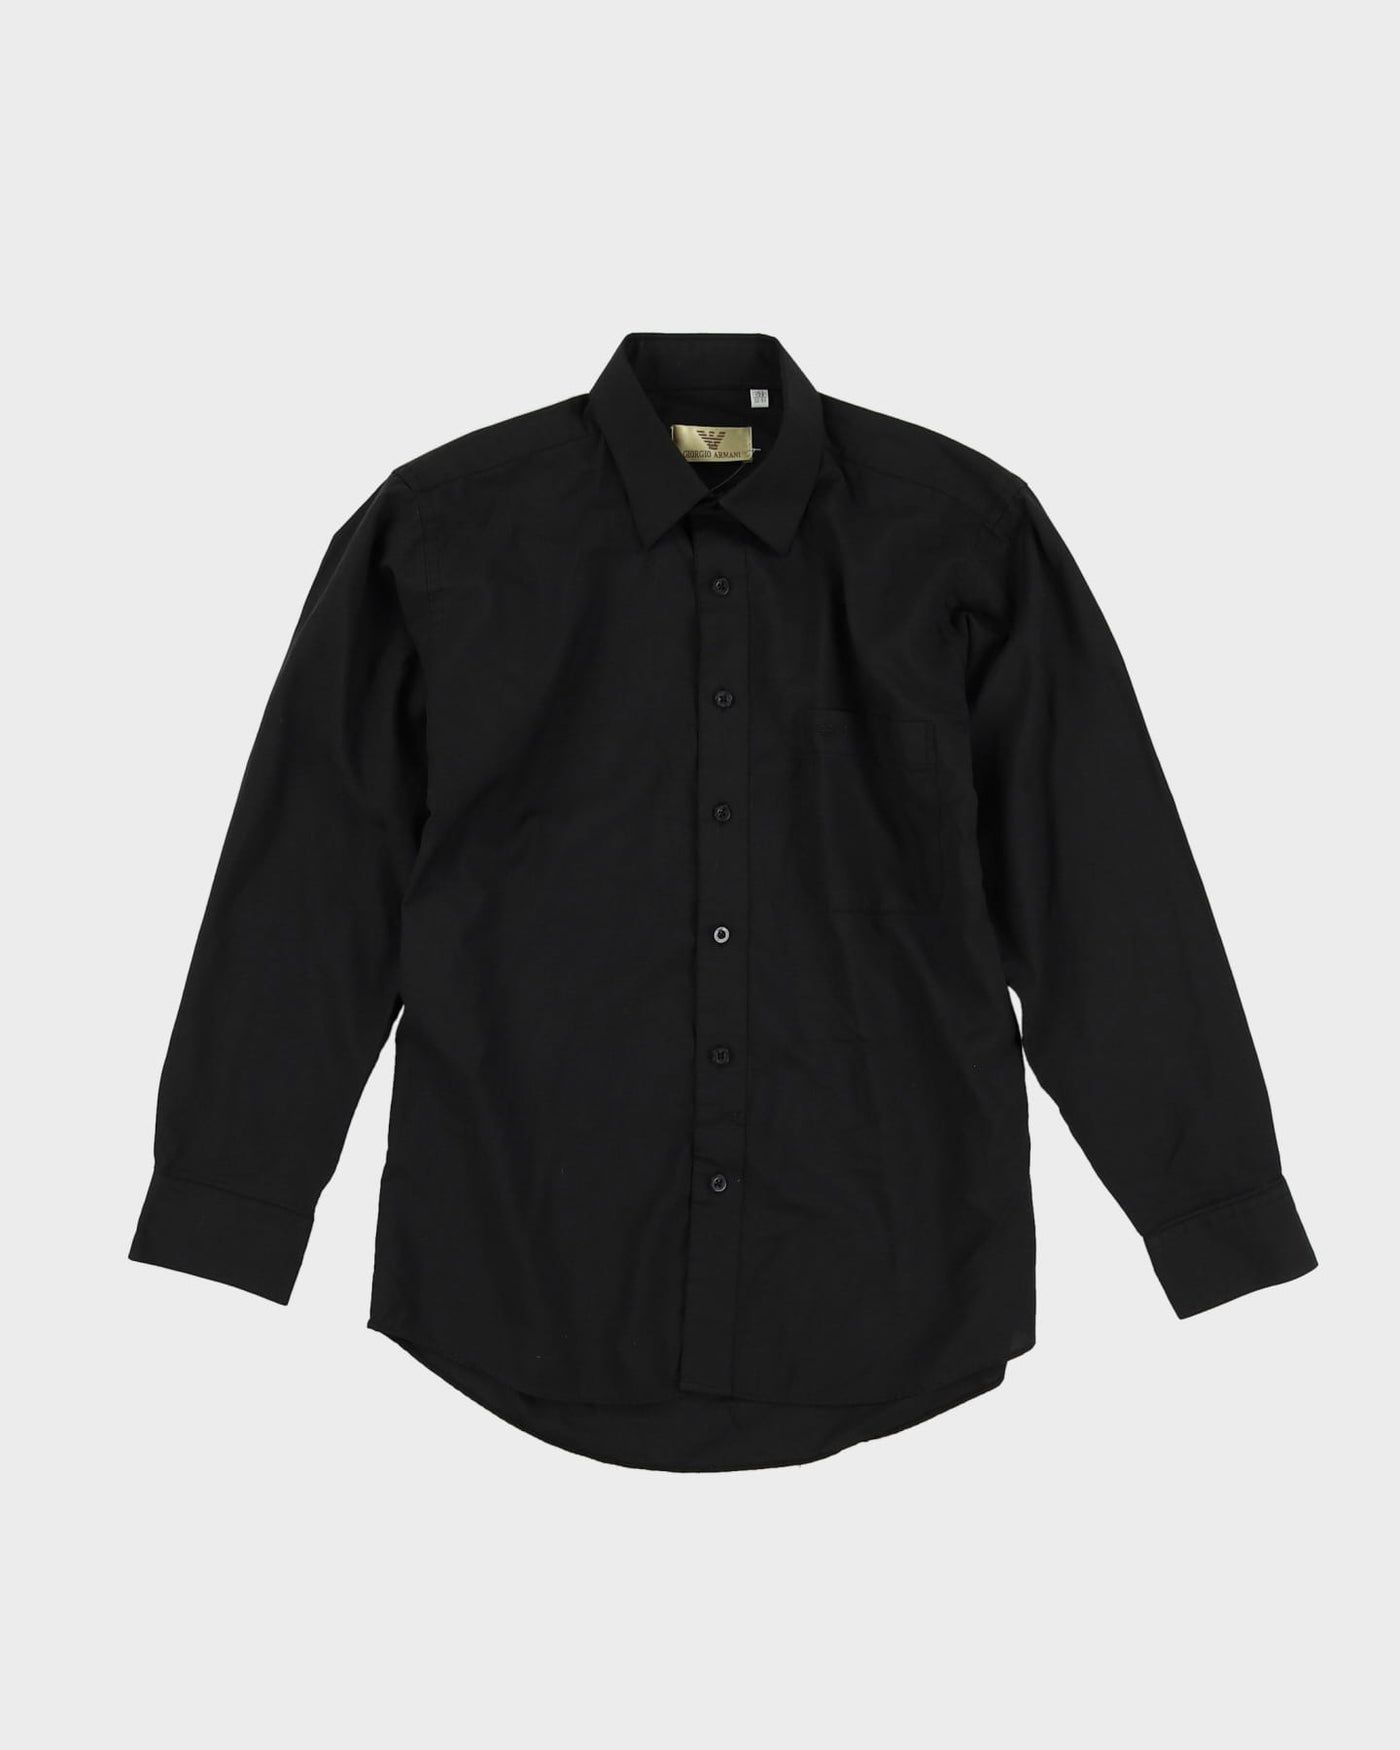 90s Giorgio Armani Black Button Up Long Sleeve Shirt - L